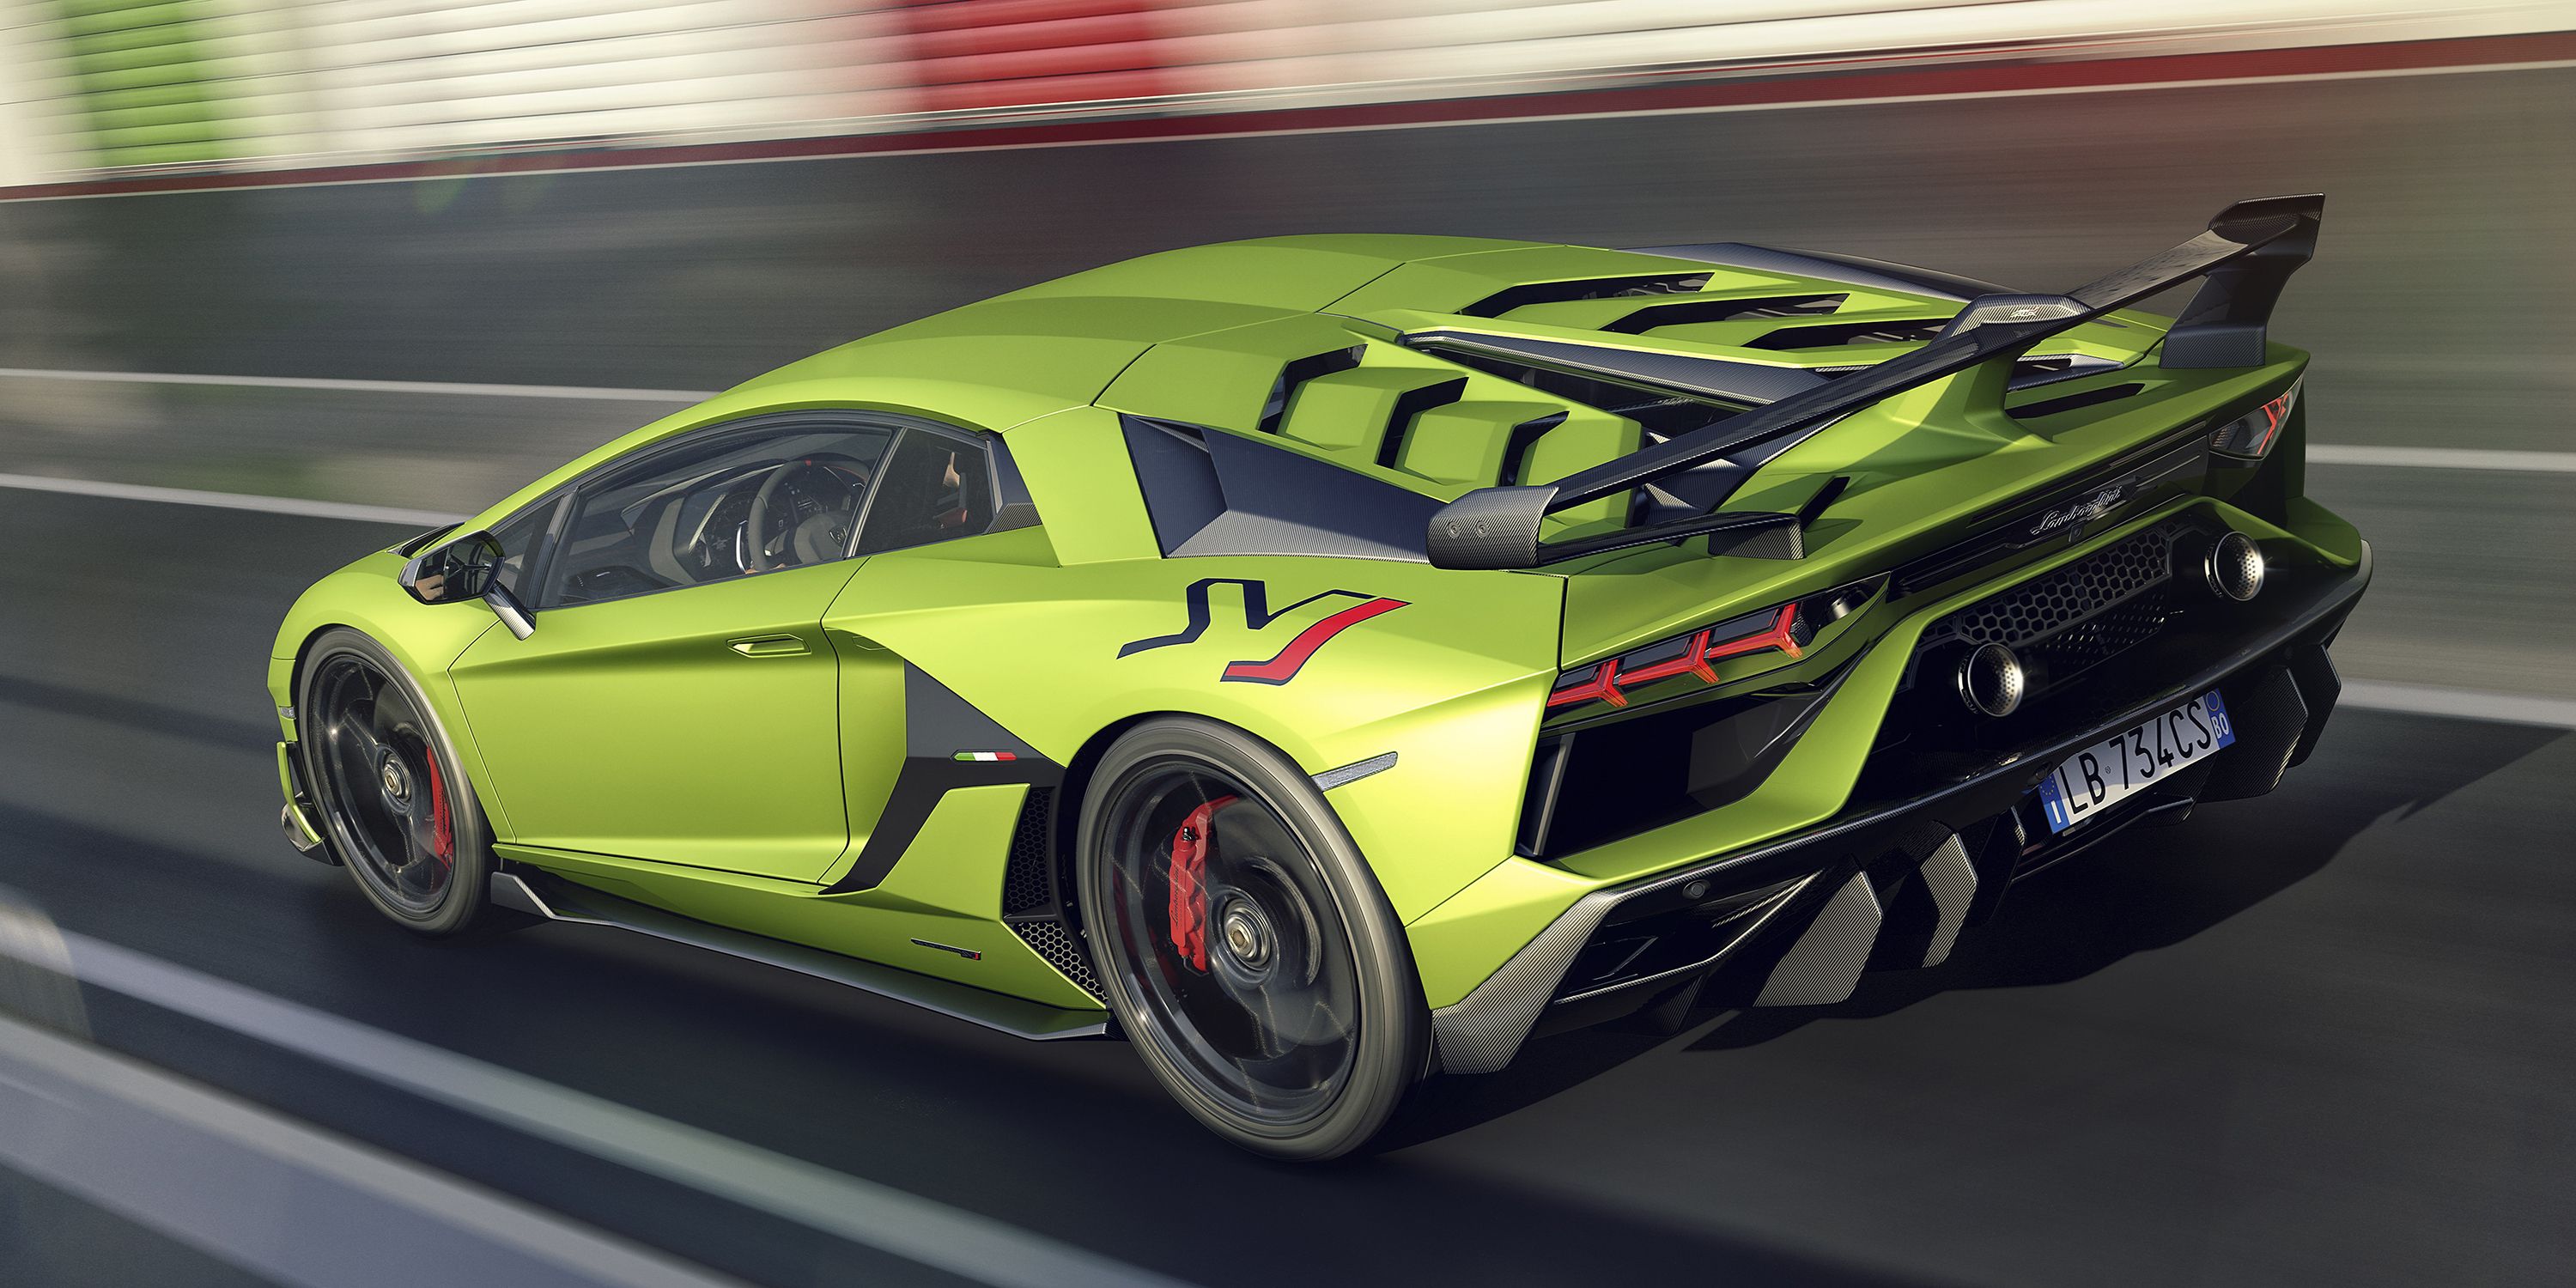 Lamborghini Aventador SVJ Takes the V12 Supercar to Outrageous Extremes